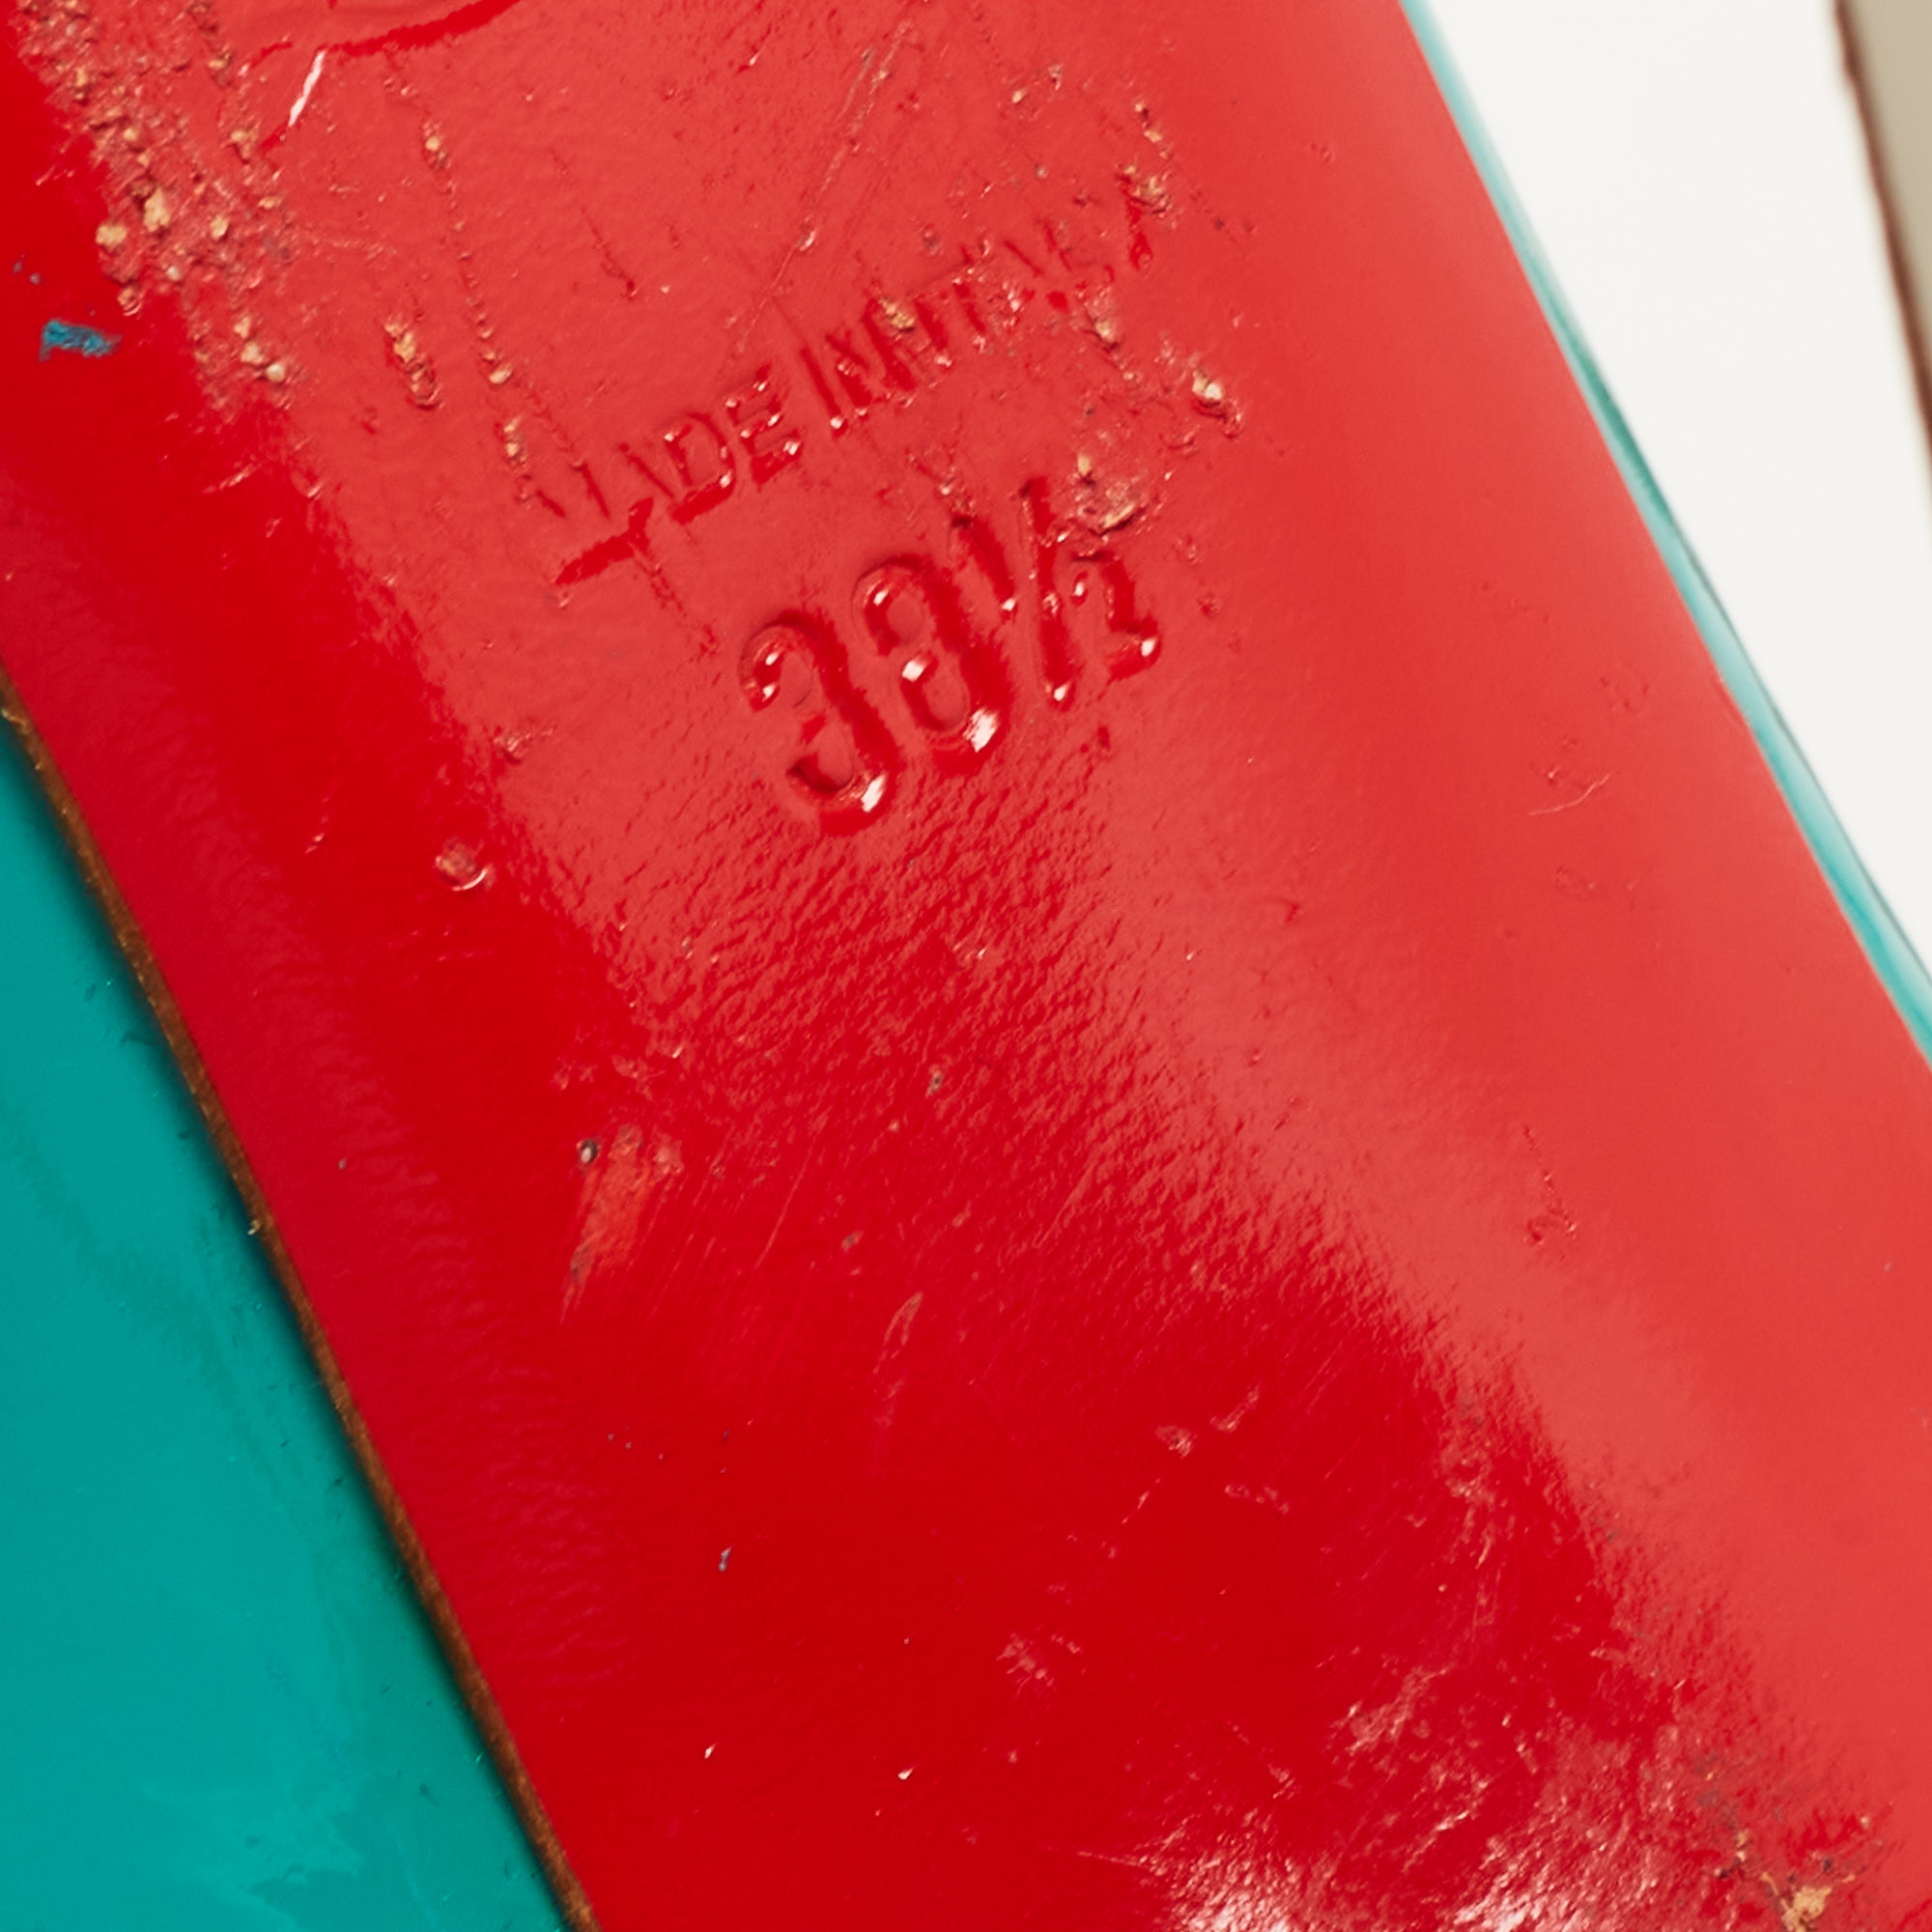 Christian Louboutin Green Patent Leather Peep Toe Slingback Pumps Size 38.5